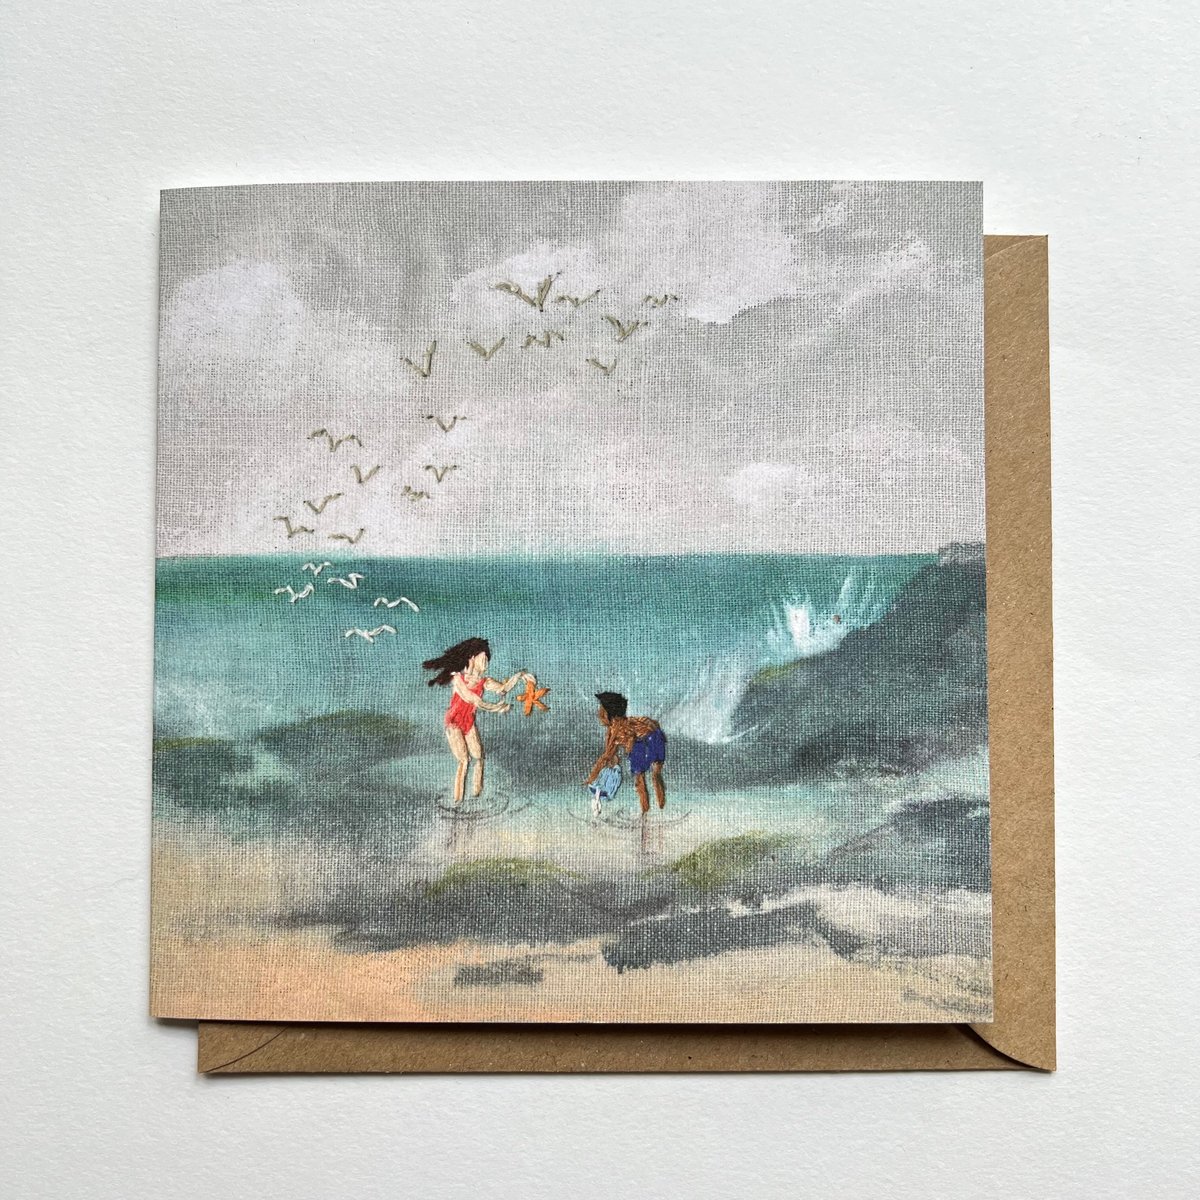 Image of Coastal - Set of 5 'embroidered' Luxury Greetings Cards